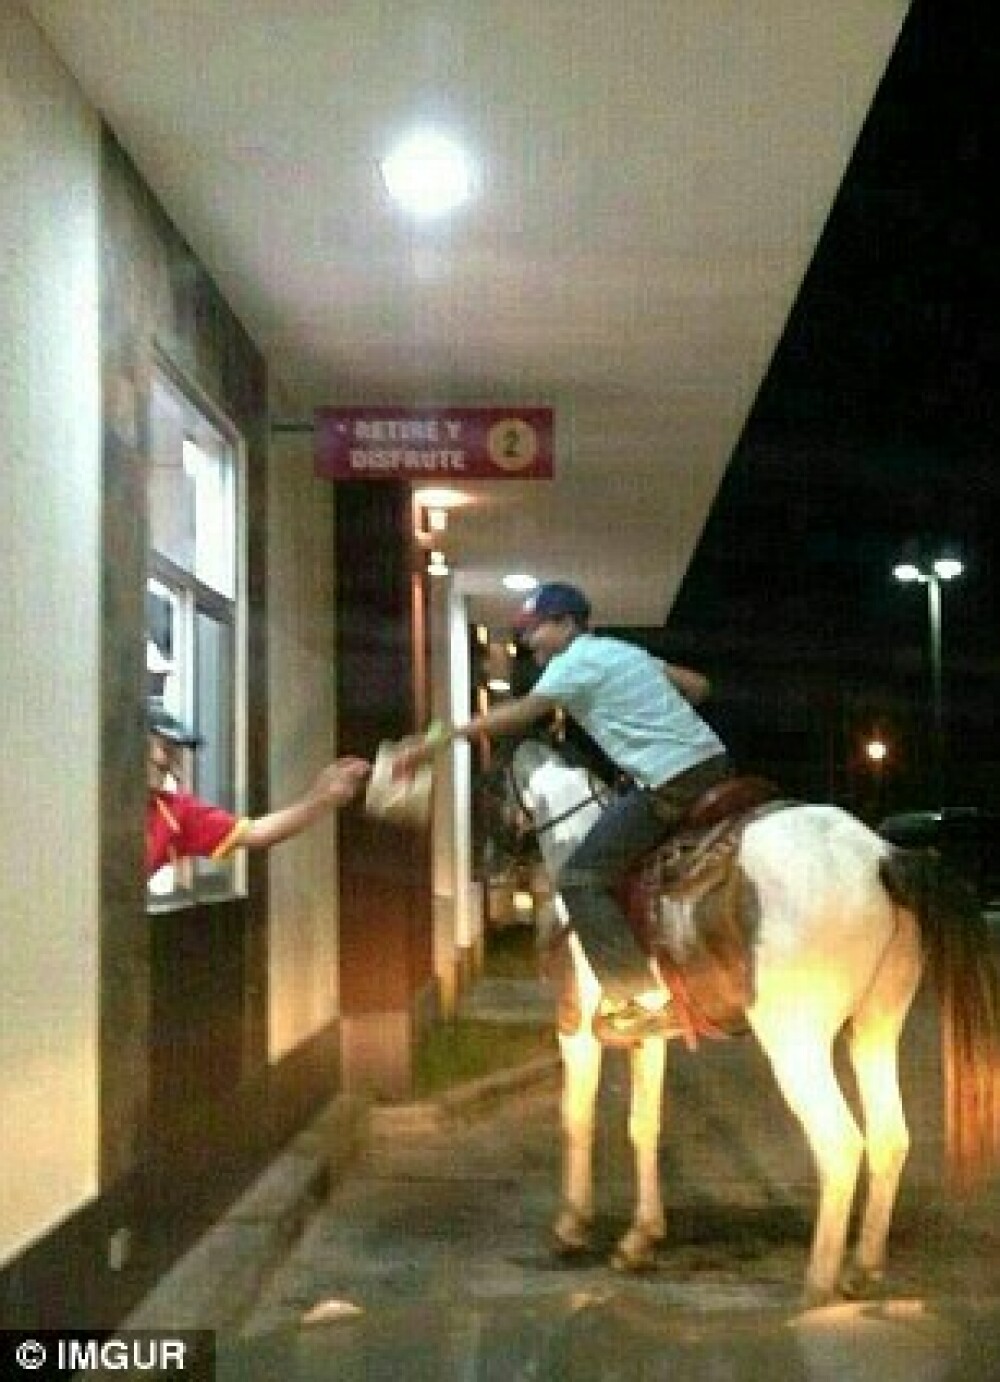 Cele mai ciudate momente surprinse in Statele Unite in restaurantele McDonald's - Imaginea 1